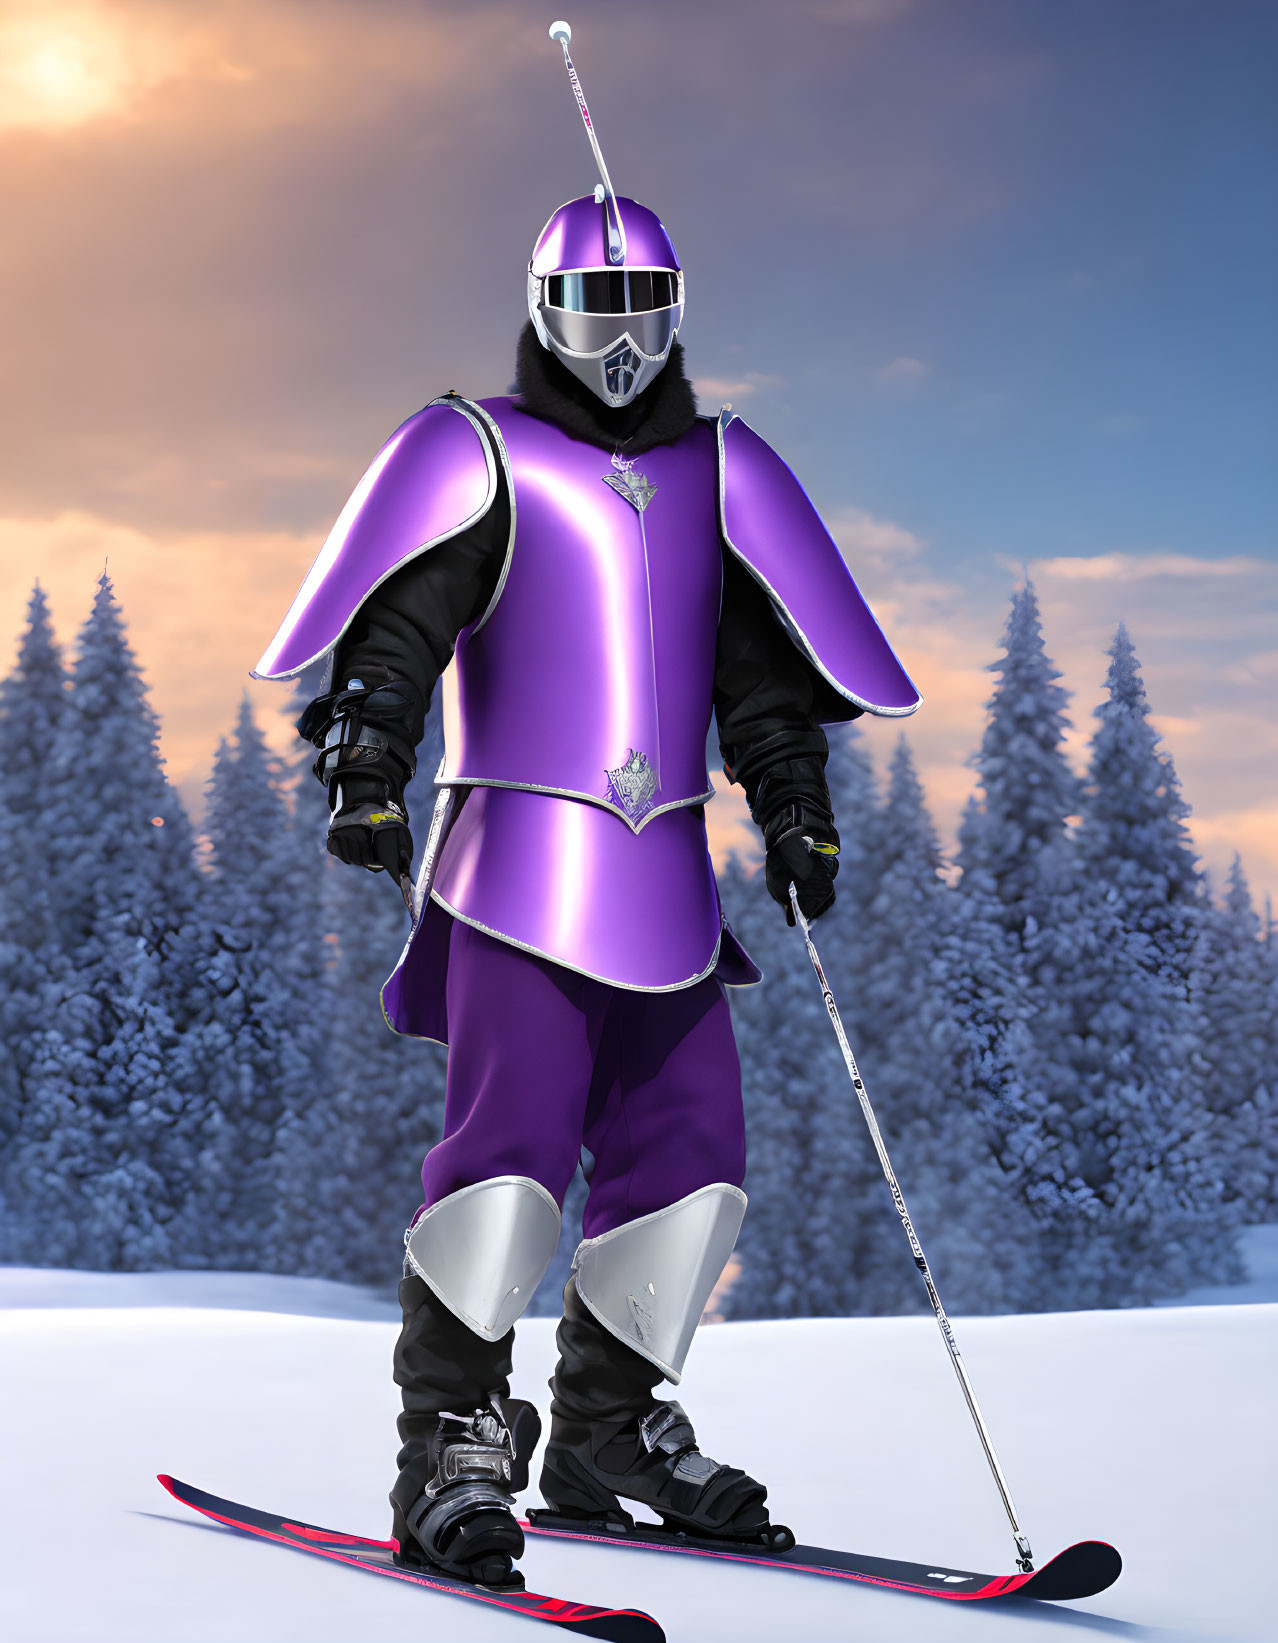 Purple-armored knight skiing on snowy hillside at twilight